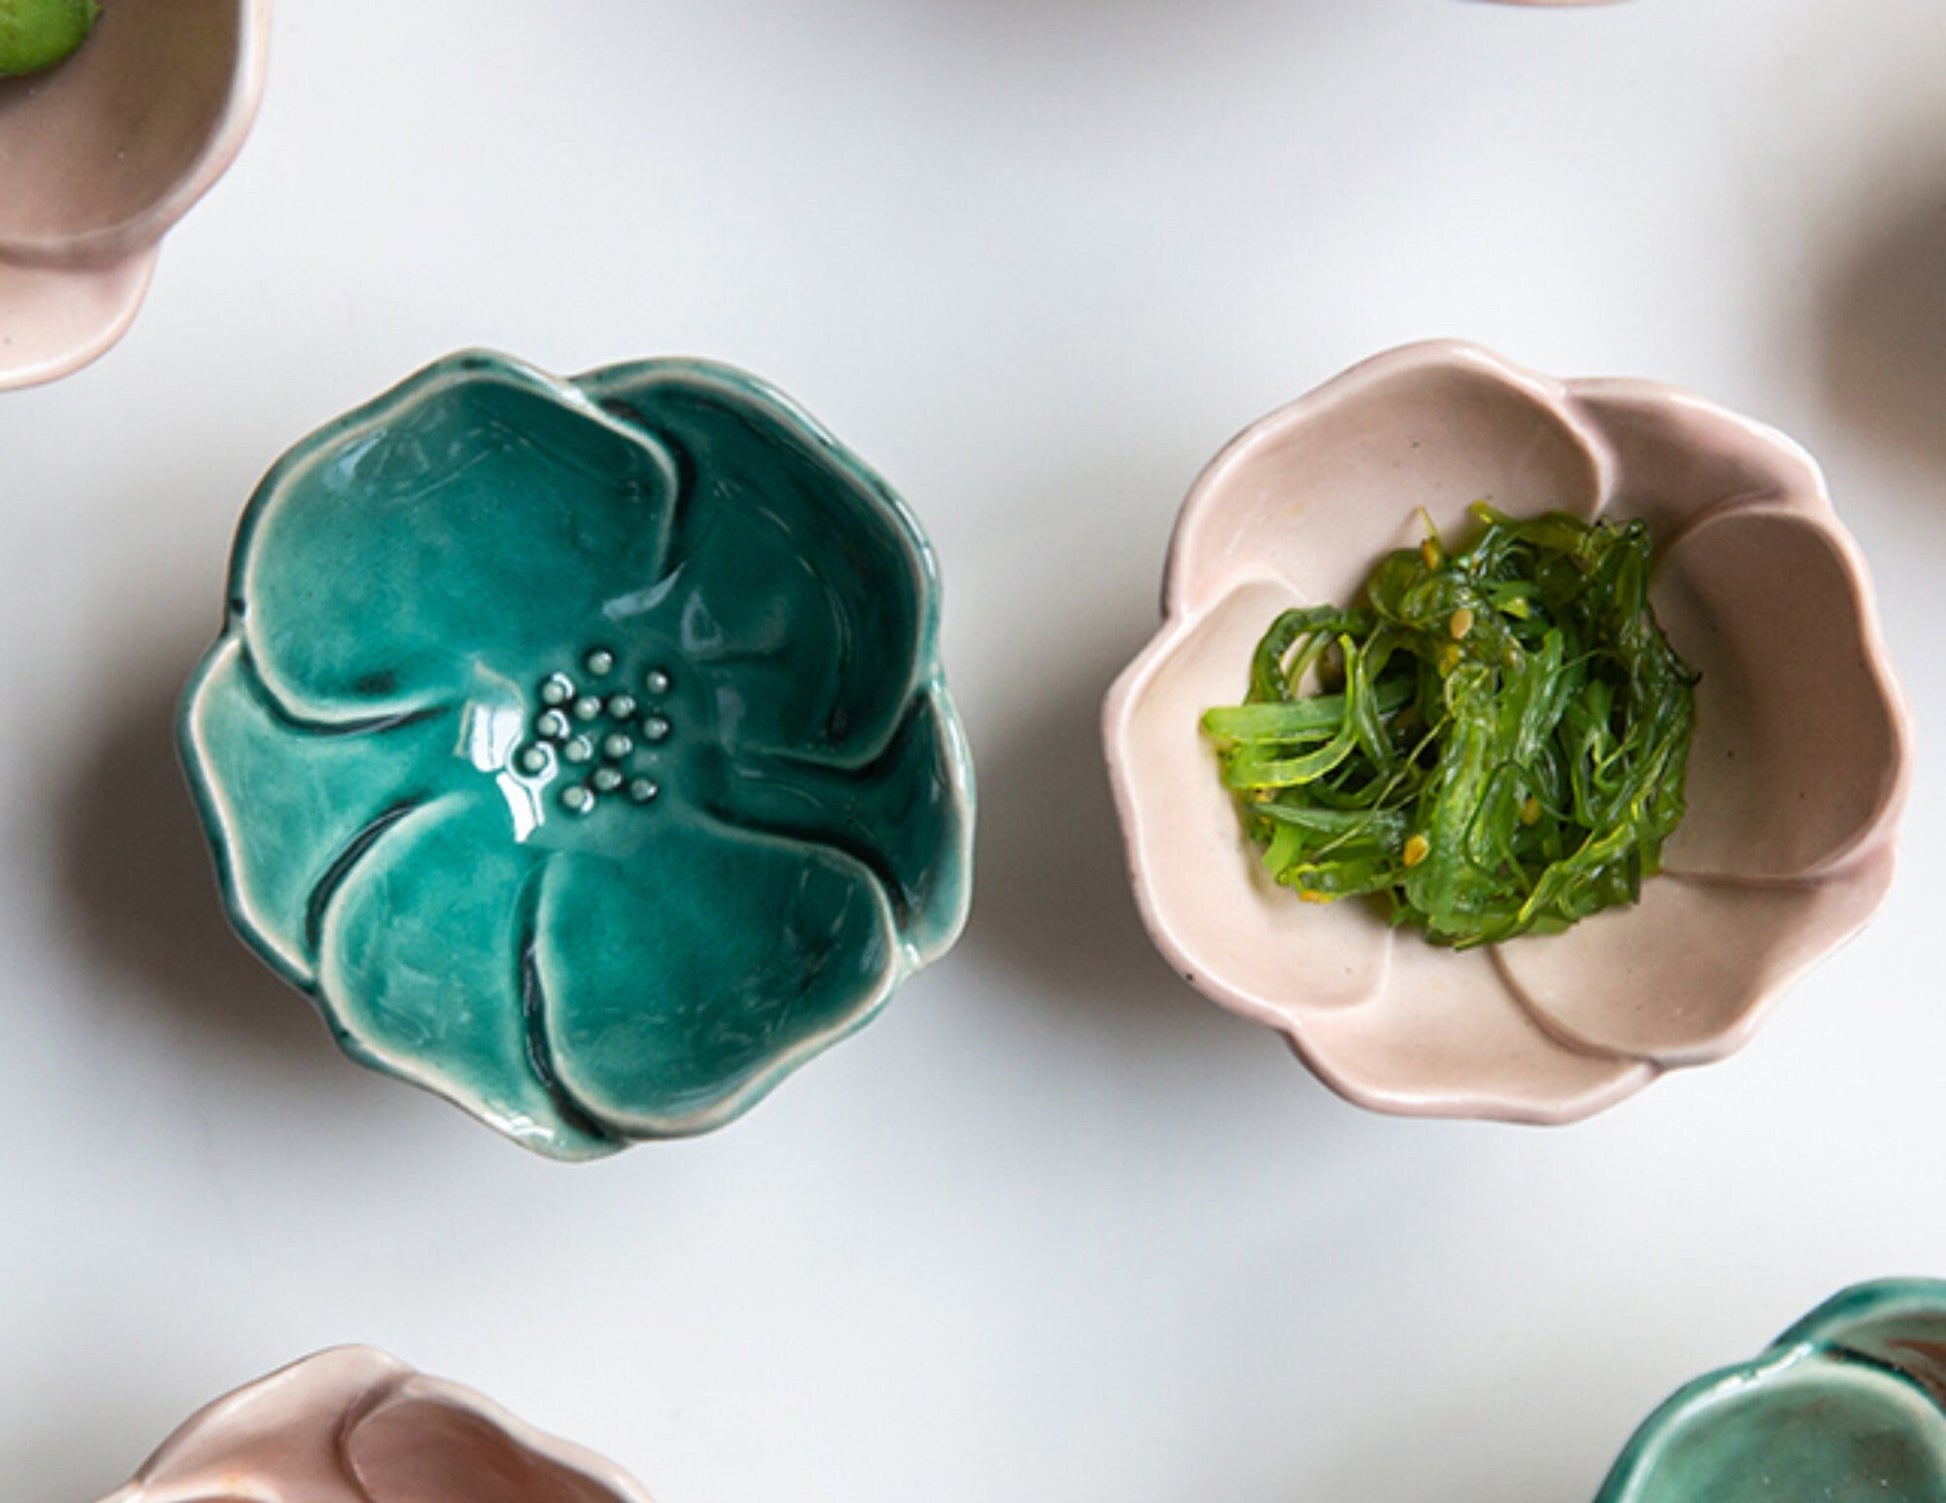 Camellia Ceramic Sauce Bowl, Handmade, Imported From Japan | Stoneware Ornaments, Seasoning Bowl, Snacks Appetizer Dish - -